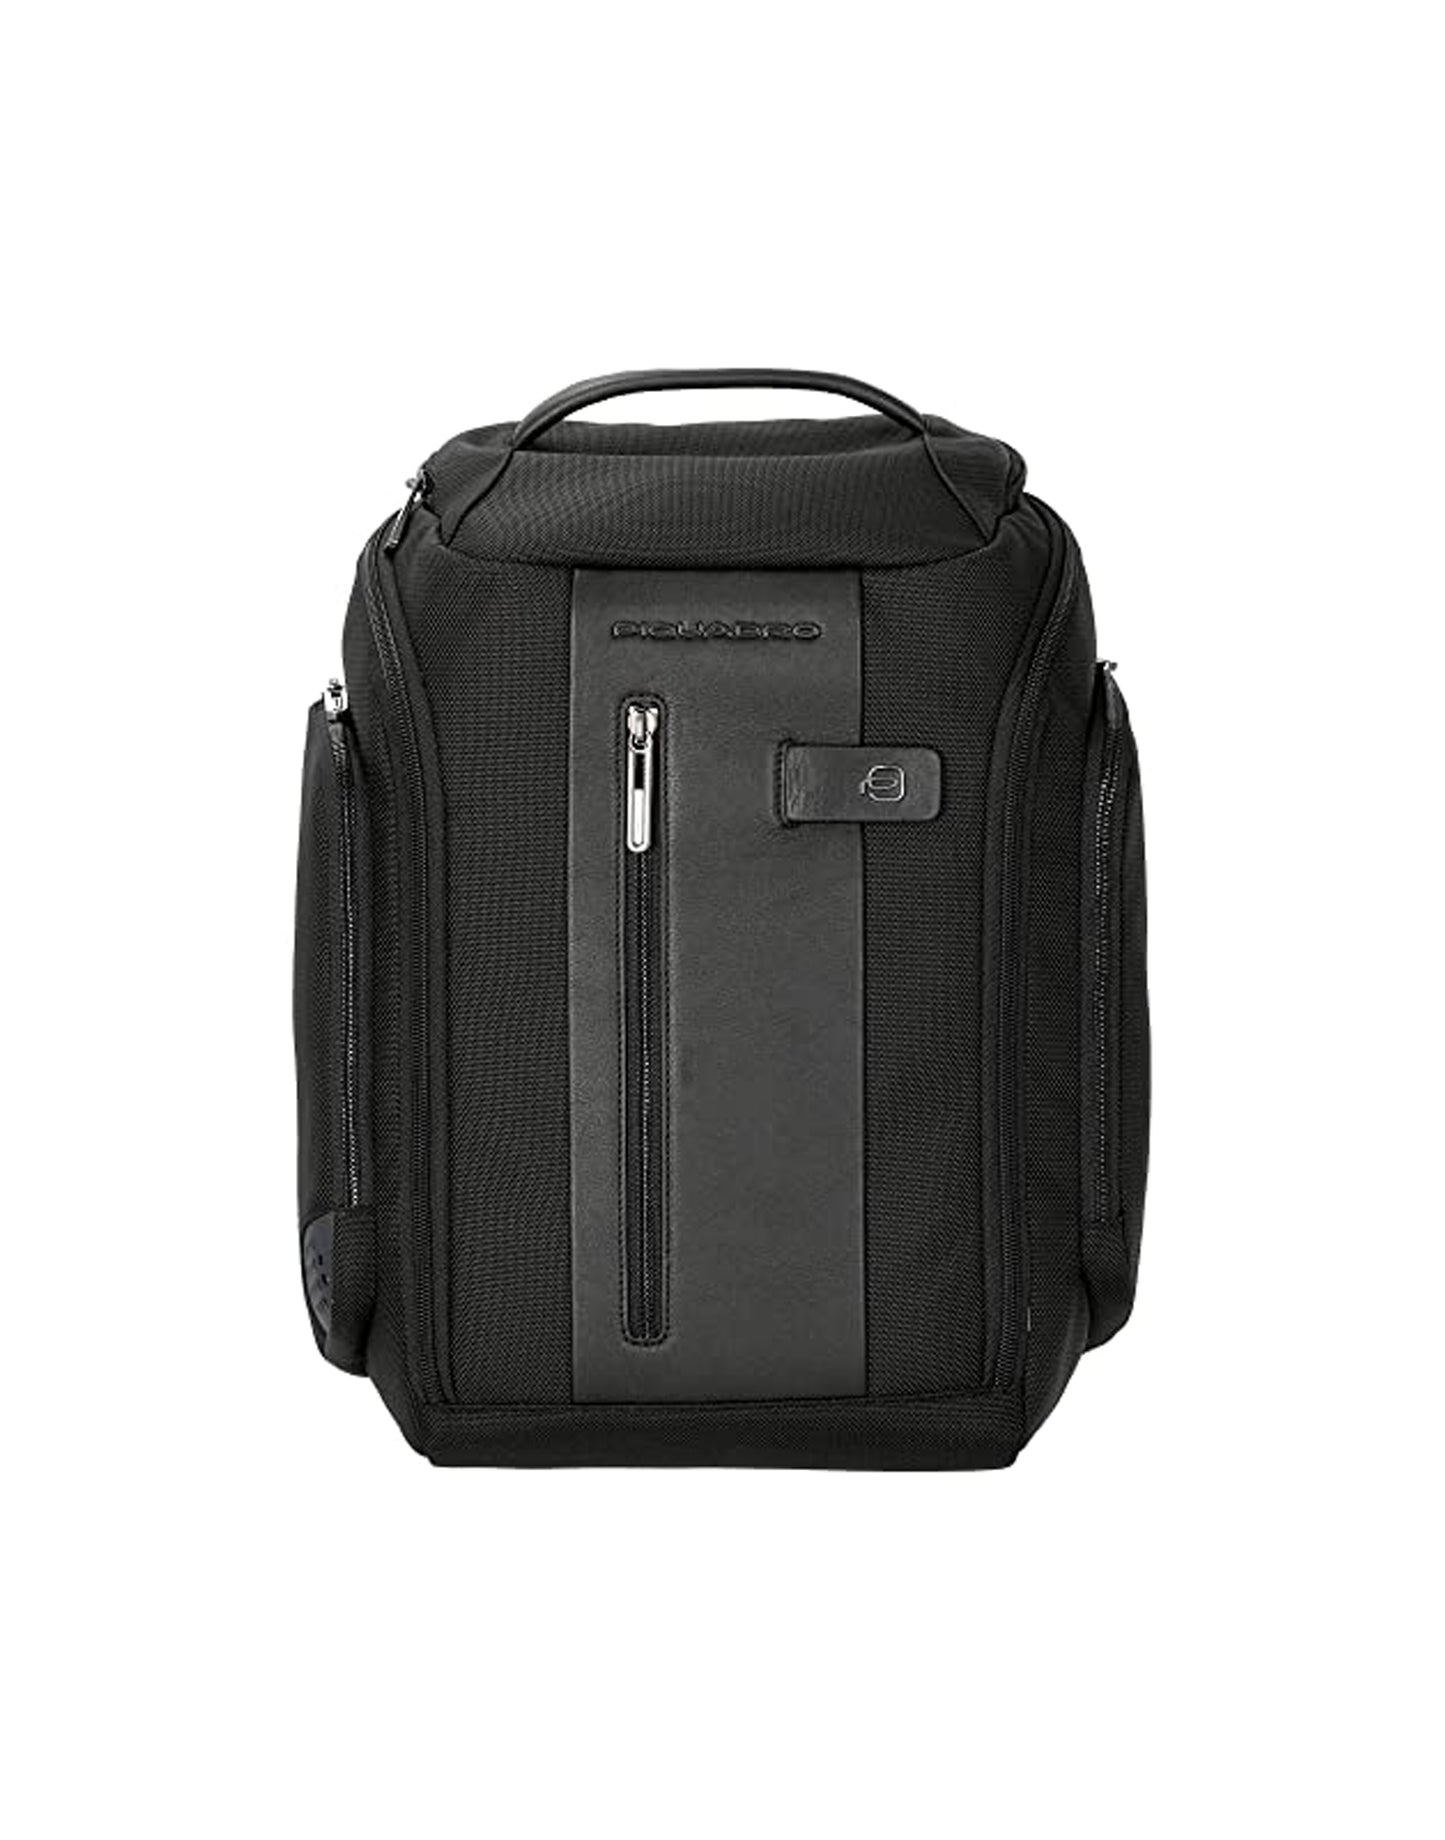 Piquadro Brief 2 portable backpack bag